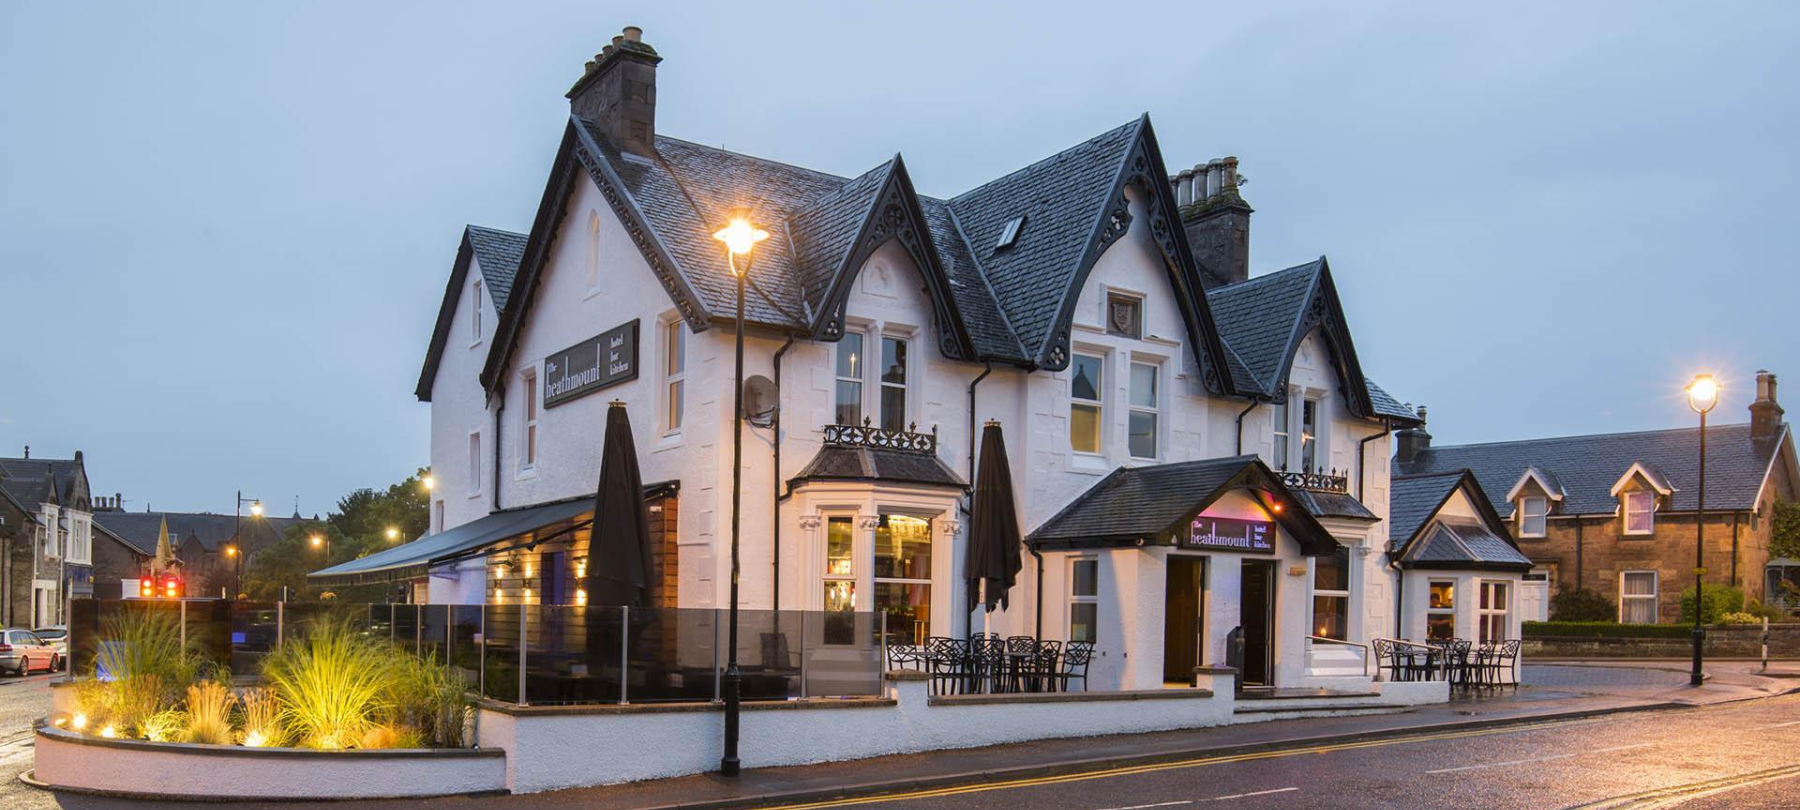 Heathmount Hotel and Restaurant Inverness